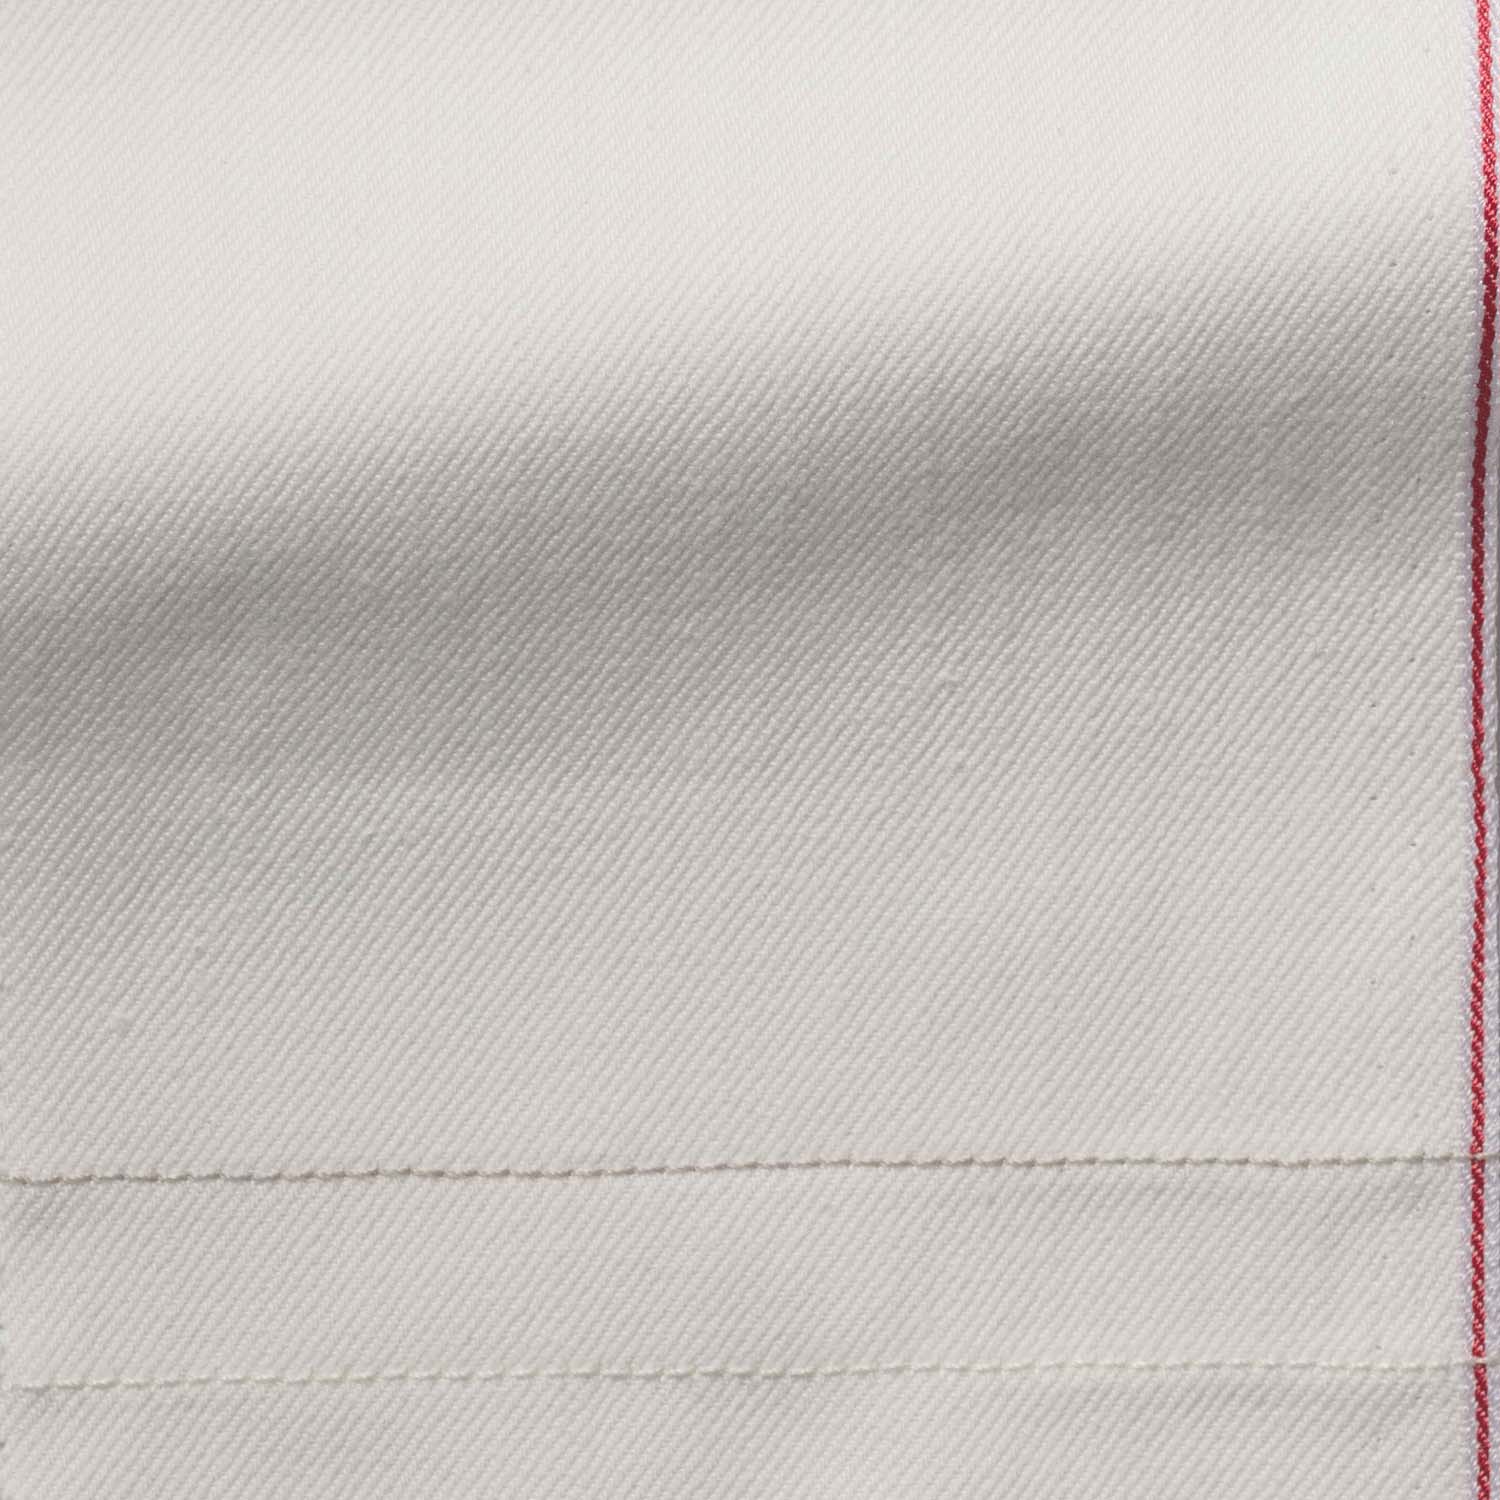 DEN006 Fabric Sample image 1